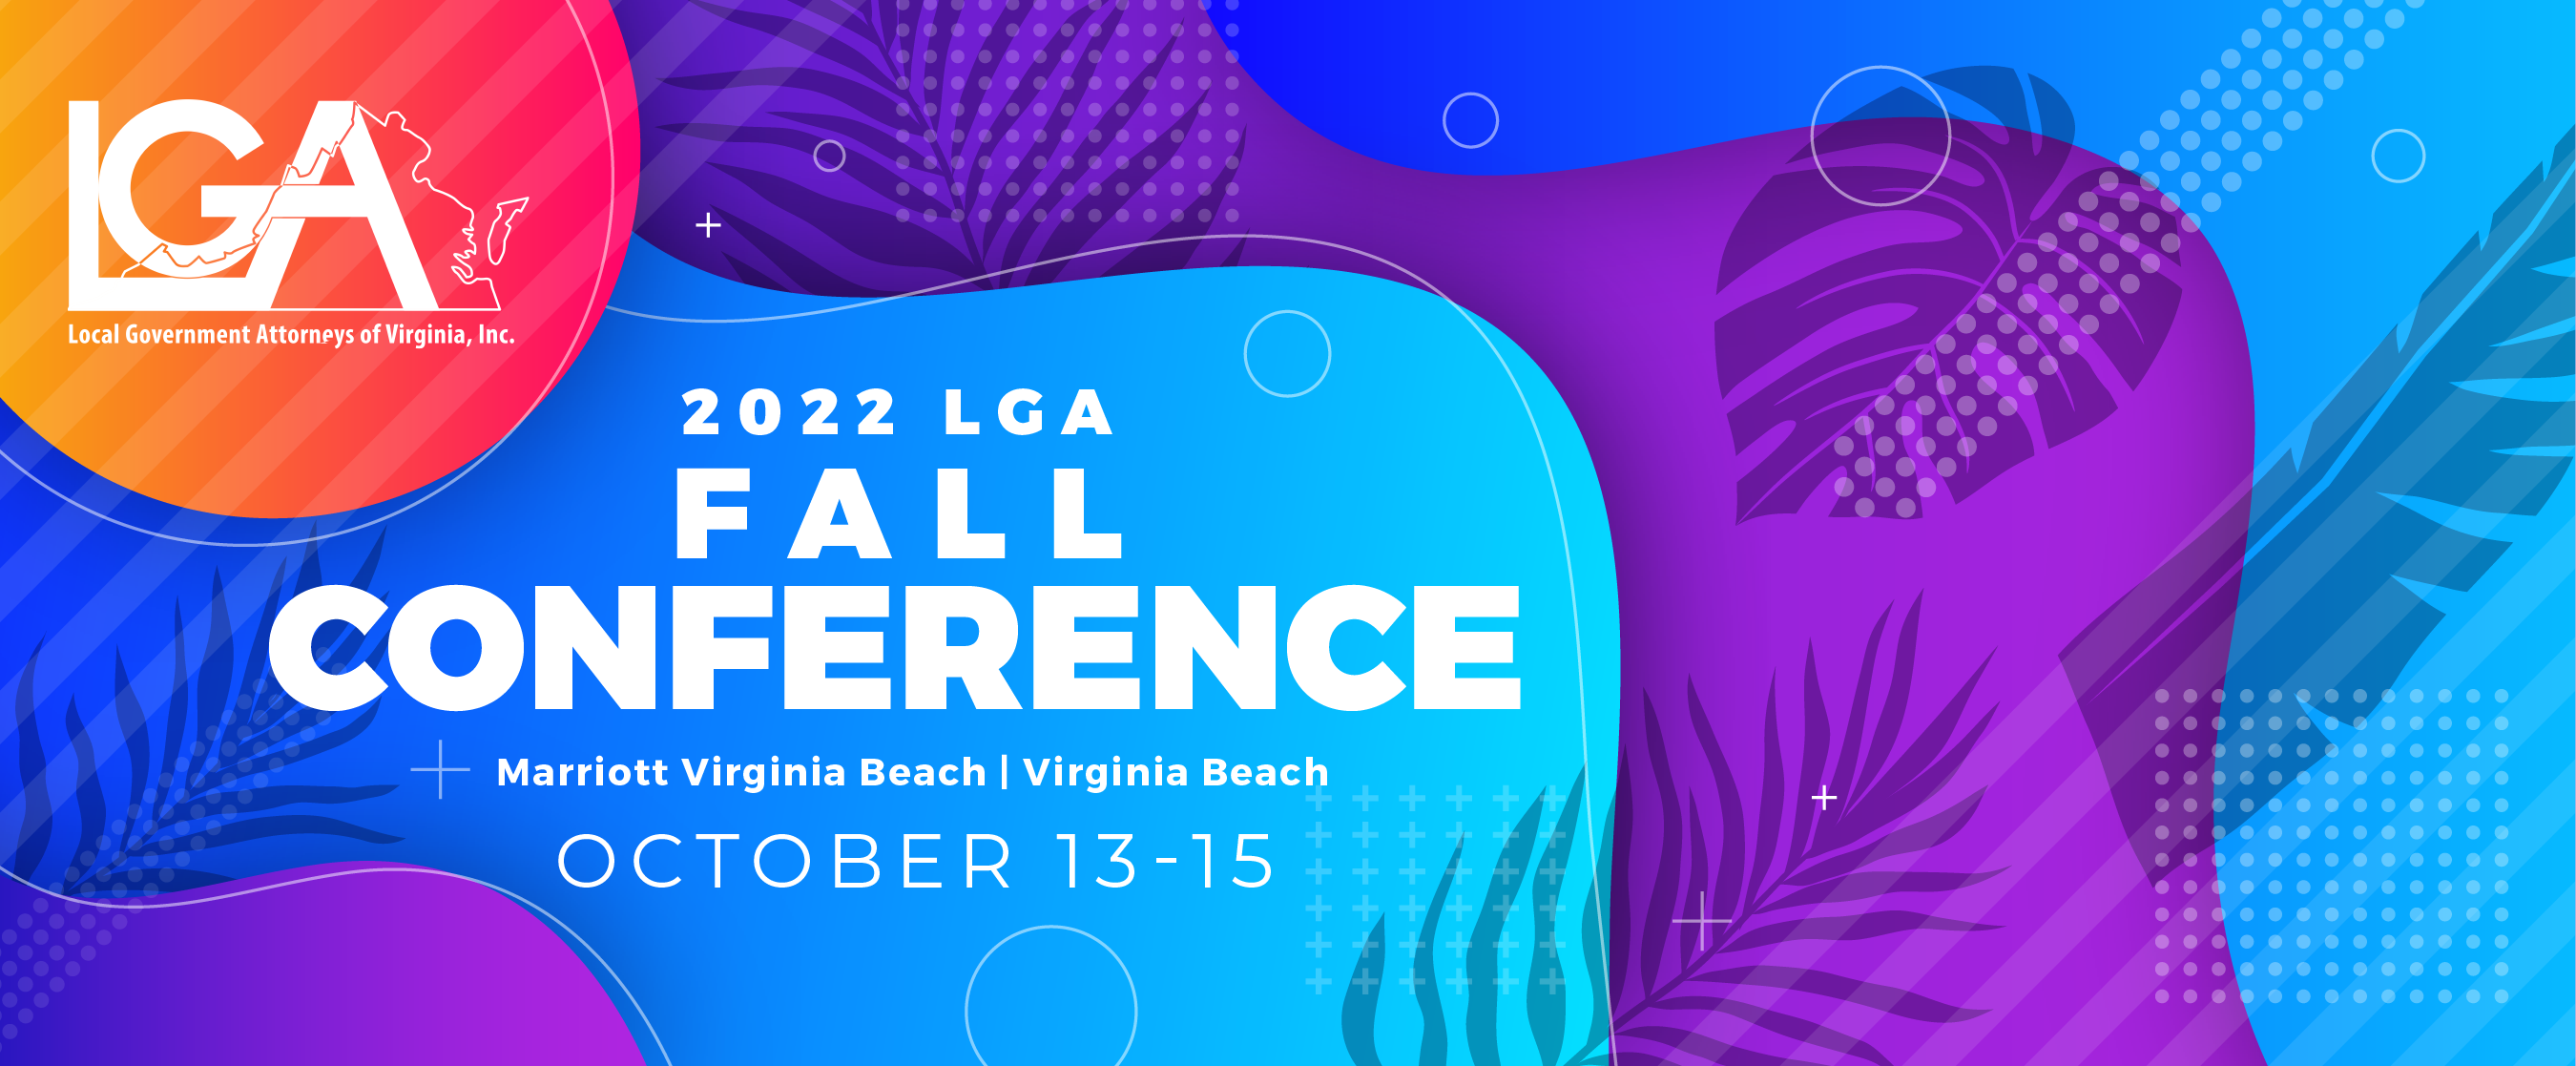 2022 LGA Fall Conference